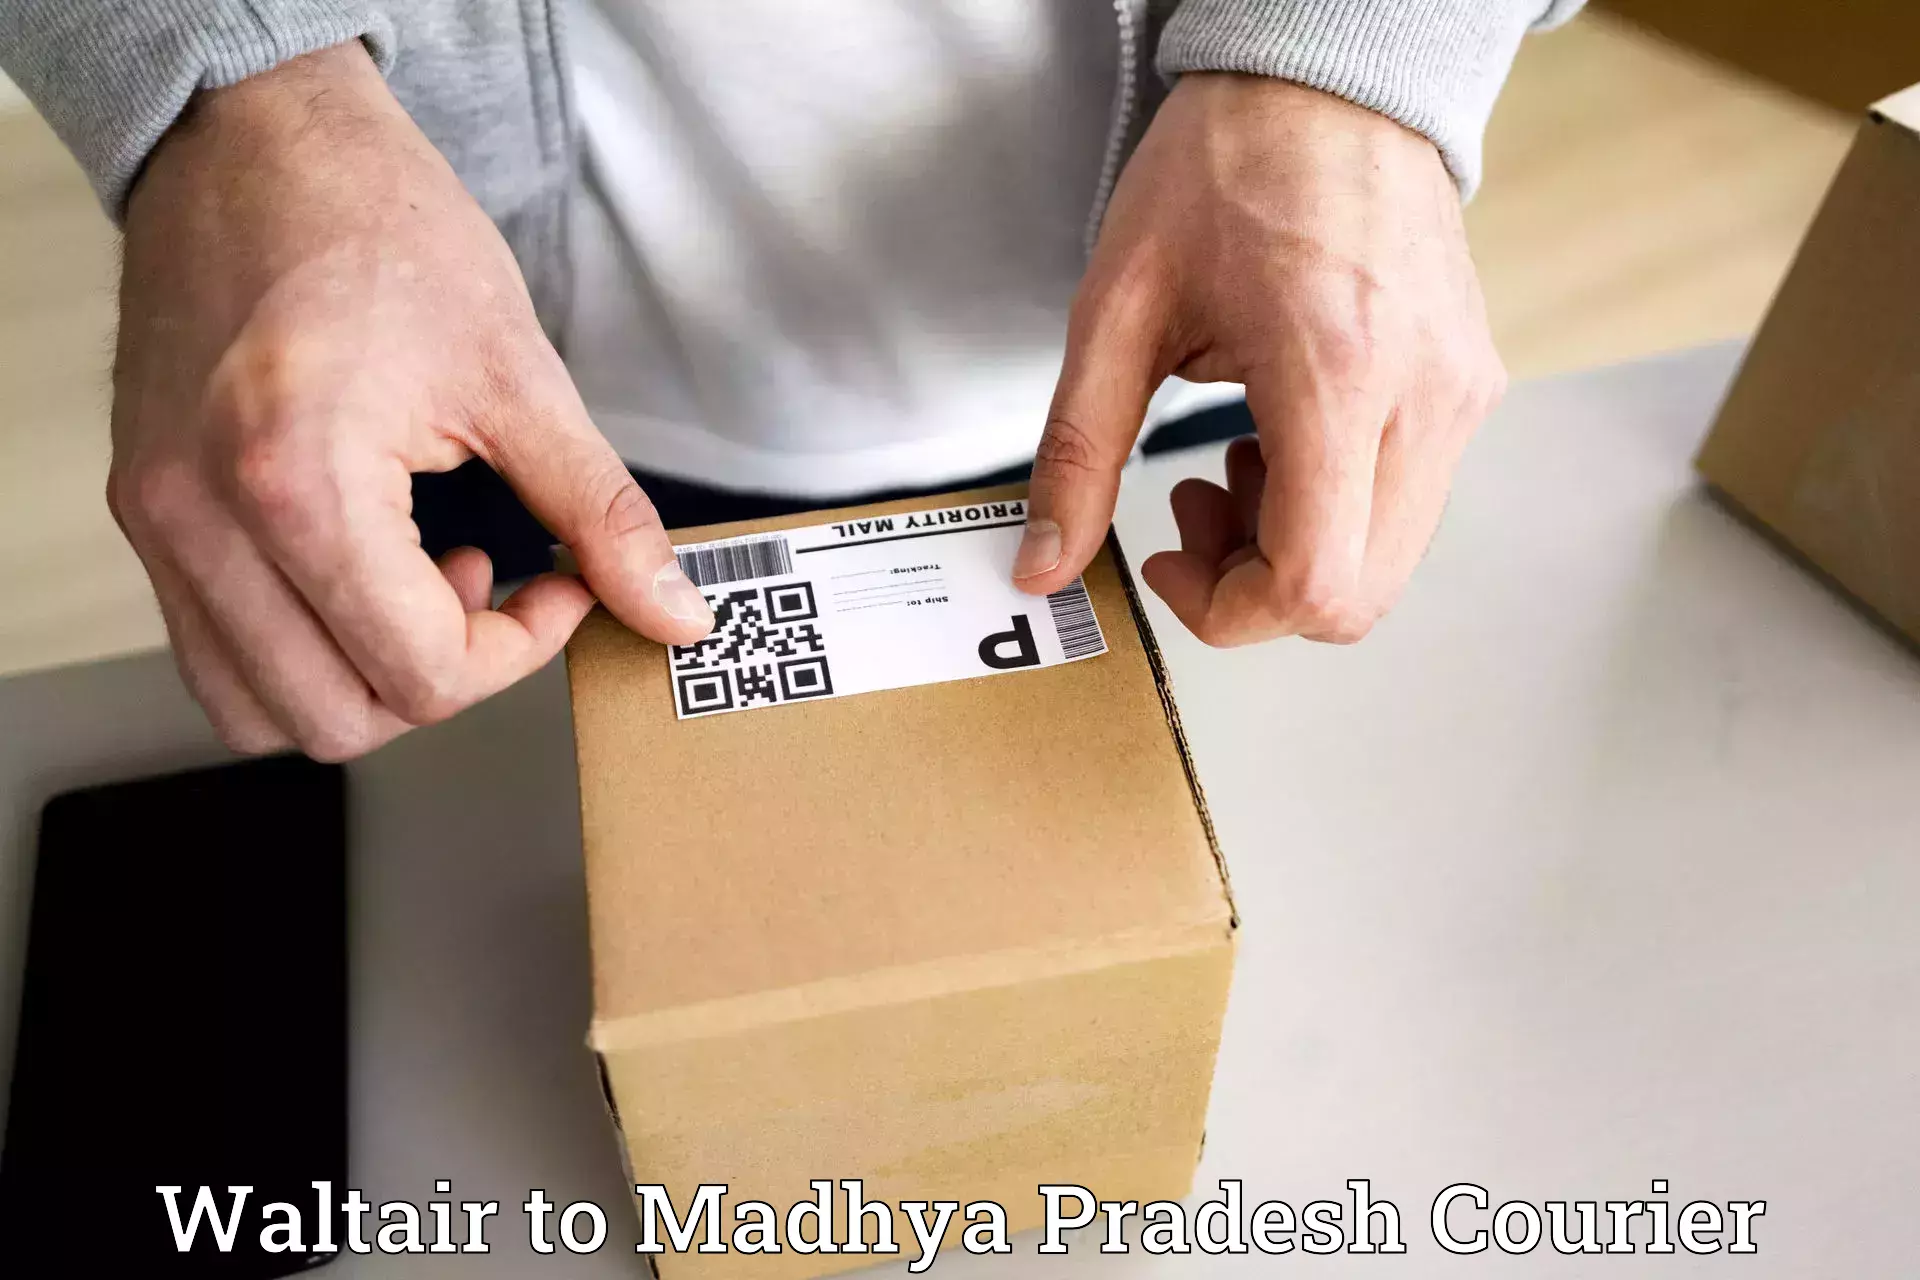 High-capacity parcel service Waltair to Depalpur